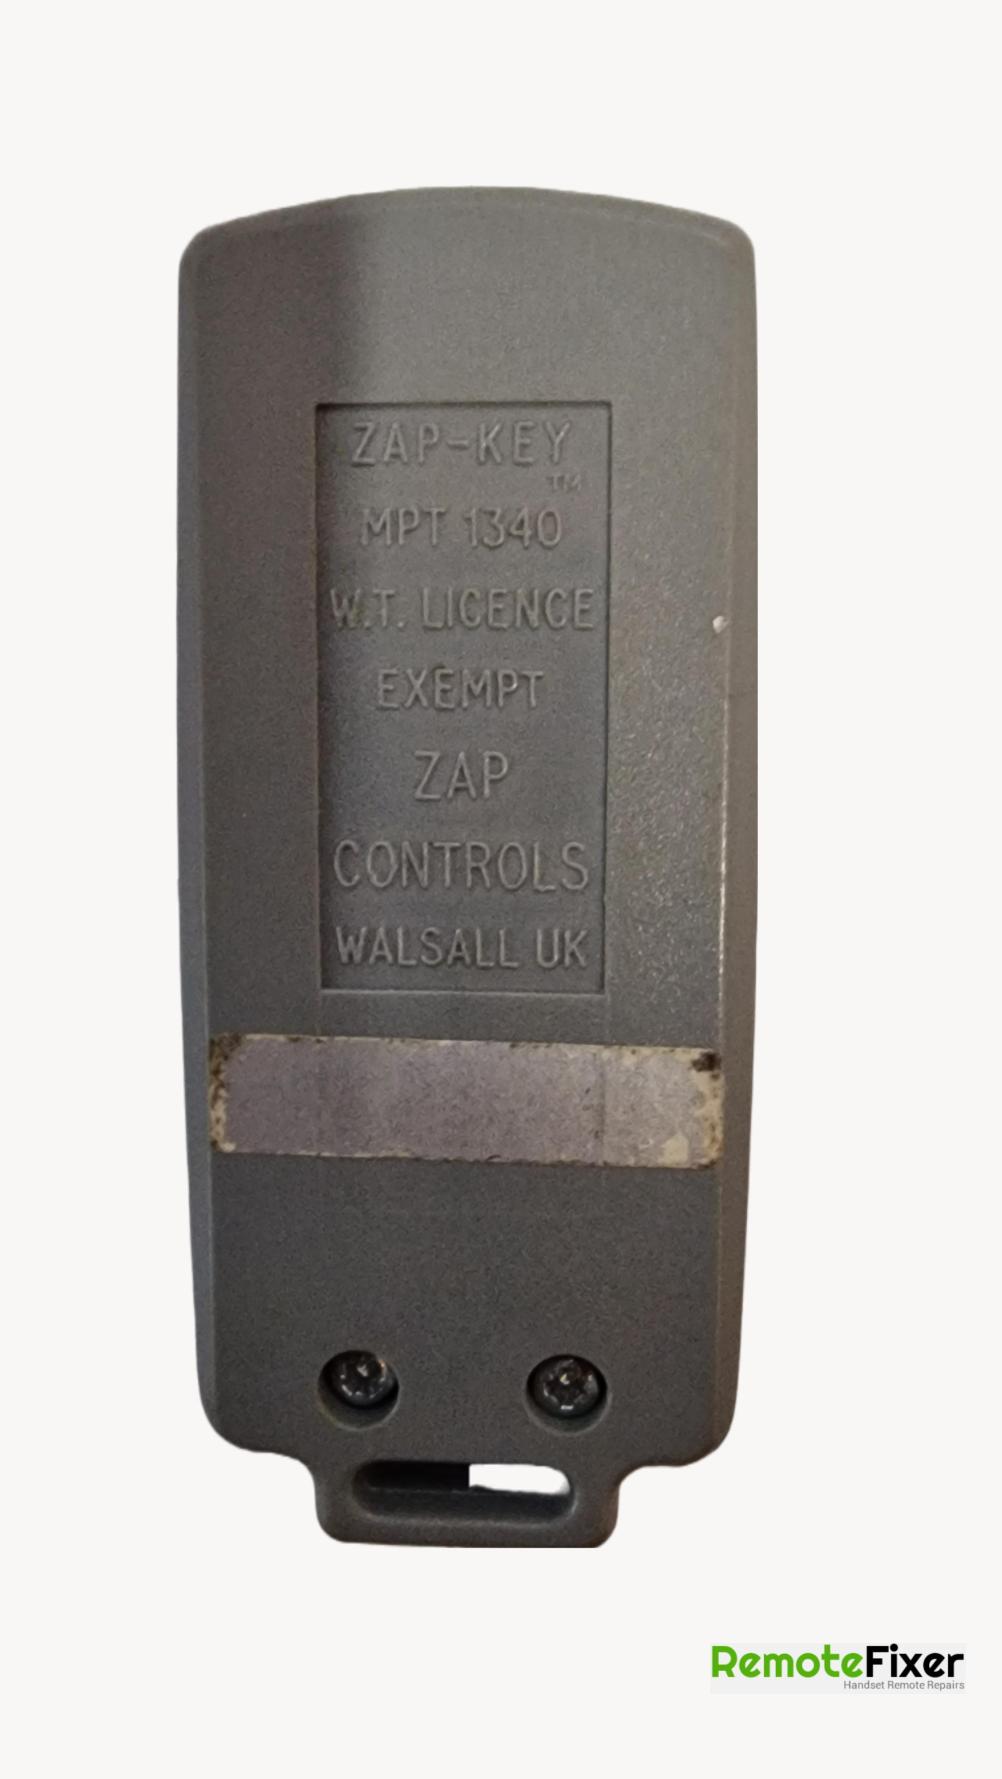 Zap MPT 1340 Remote Control - Back Image